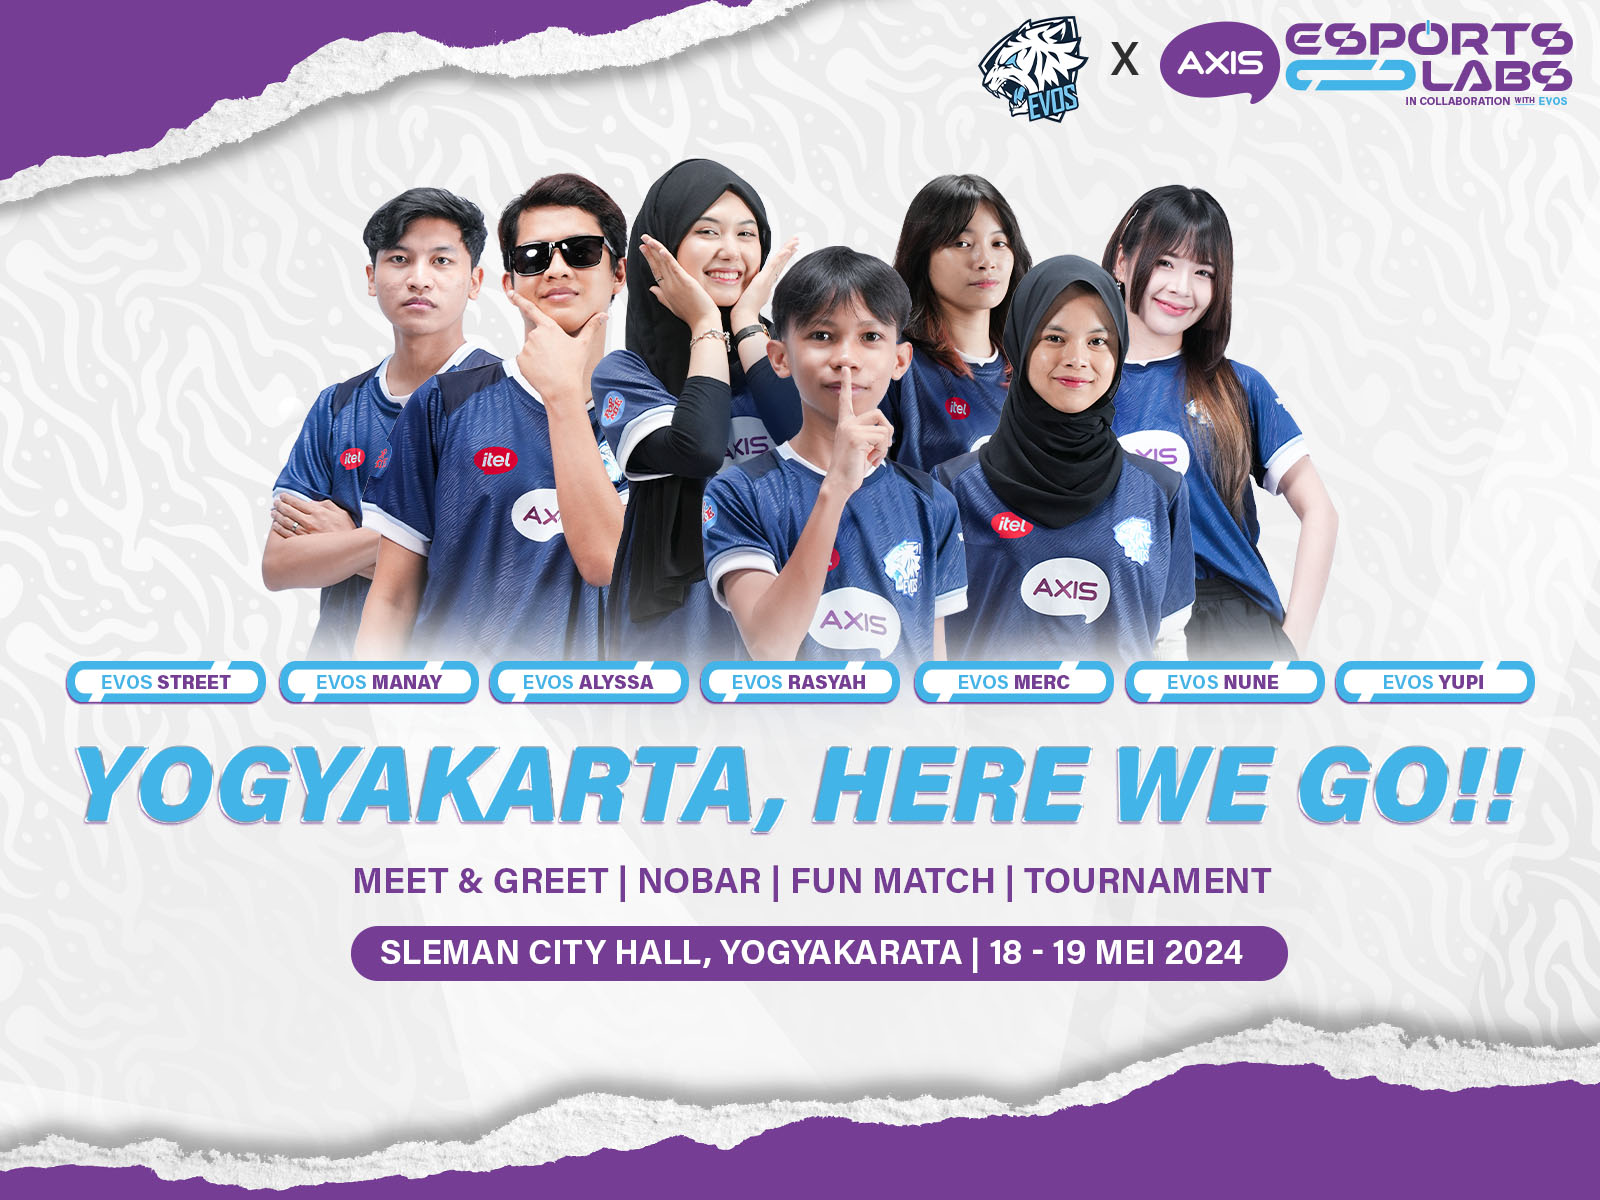 Gelombang Euforia Esports Tanpa Batas di Yogyakarta:  AXIS Esports Labs kolaborasi antara AXIS dan EVOS!